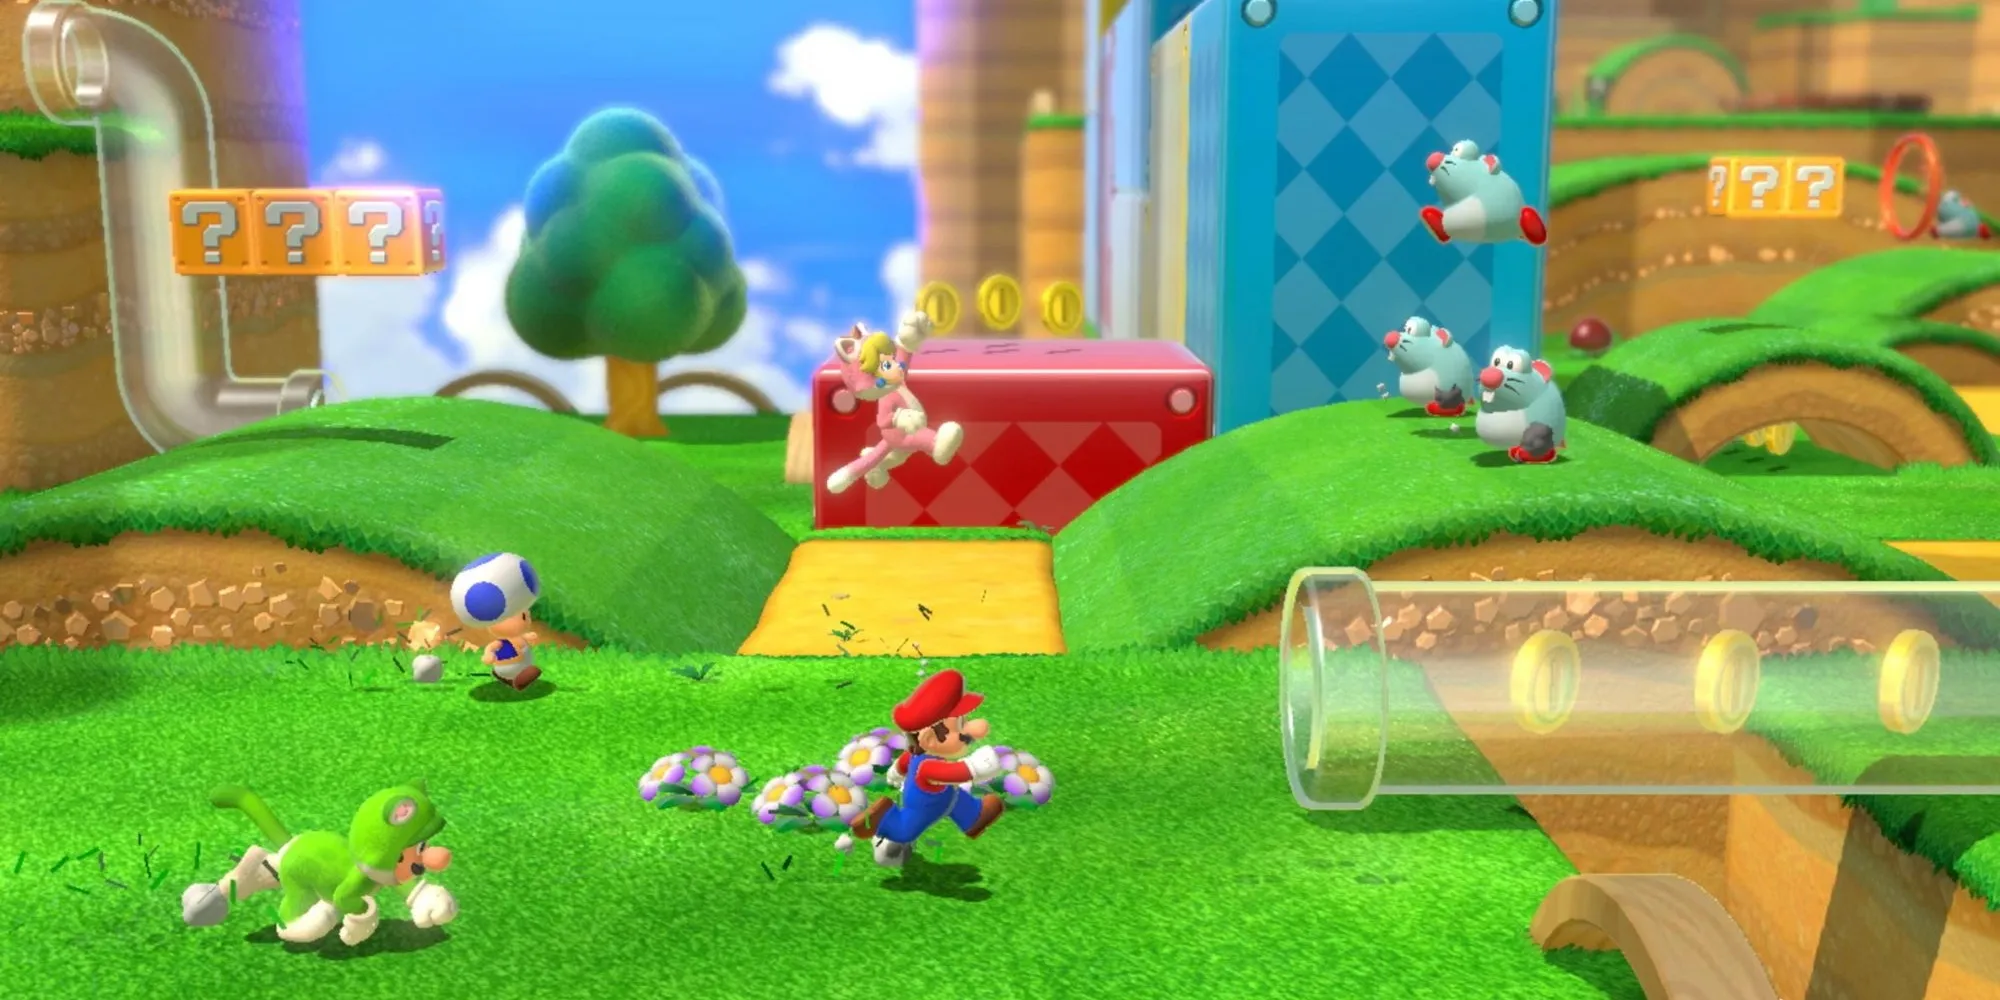 Toad, Luigi, Peach, and Mario running through a level in Super Mario 3D World